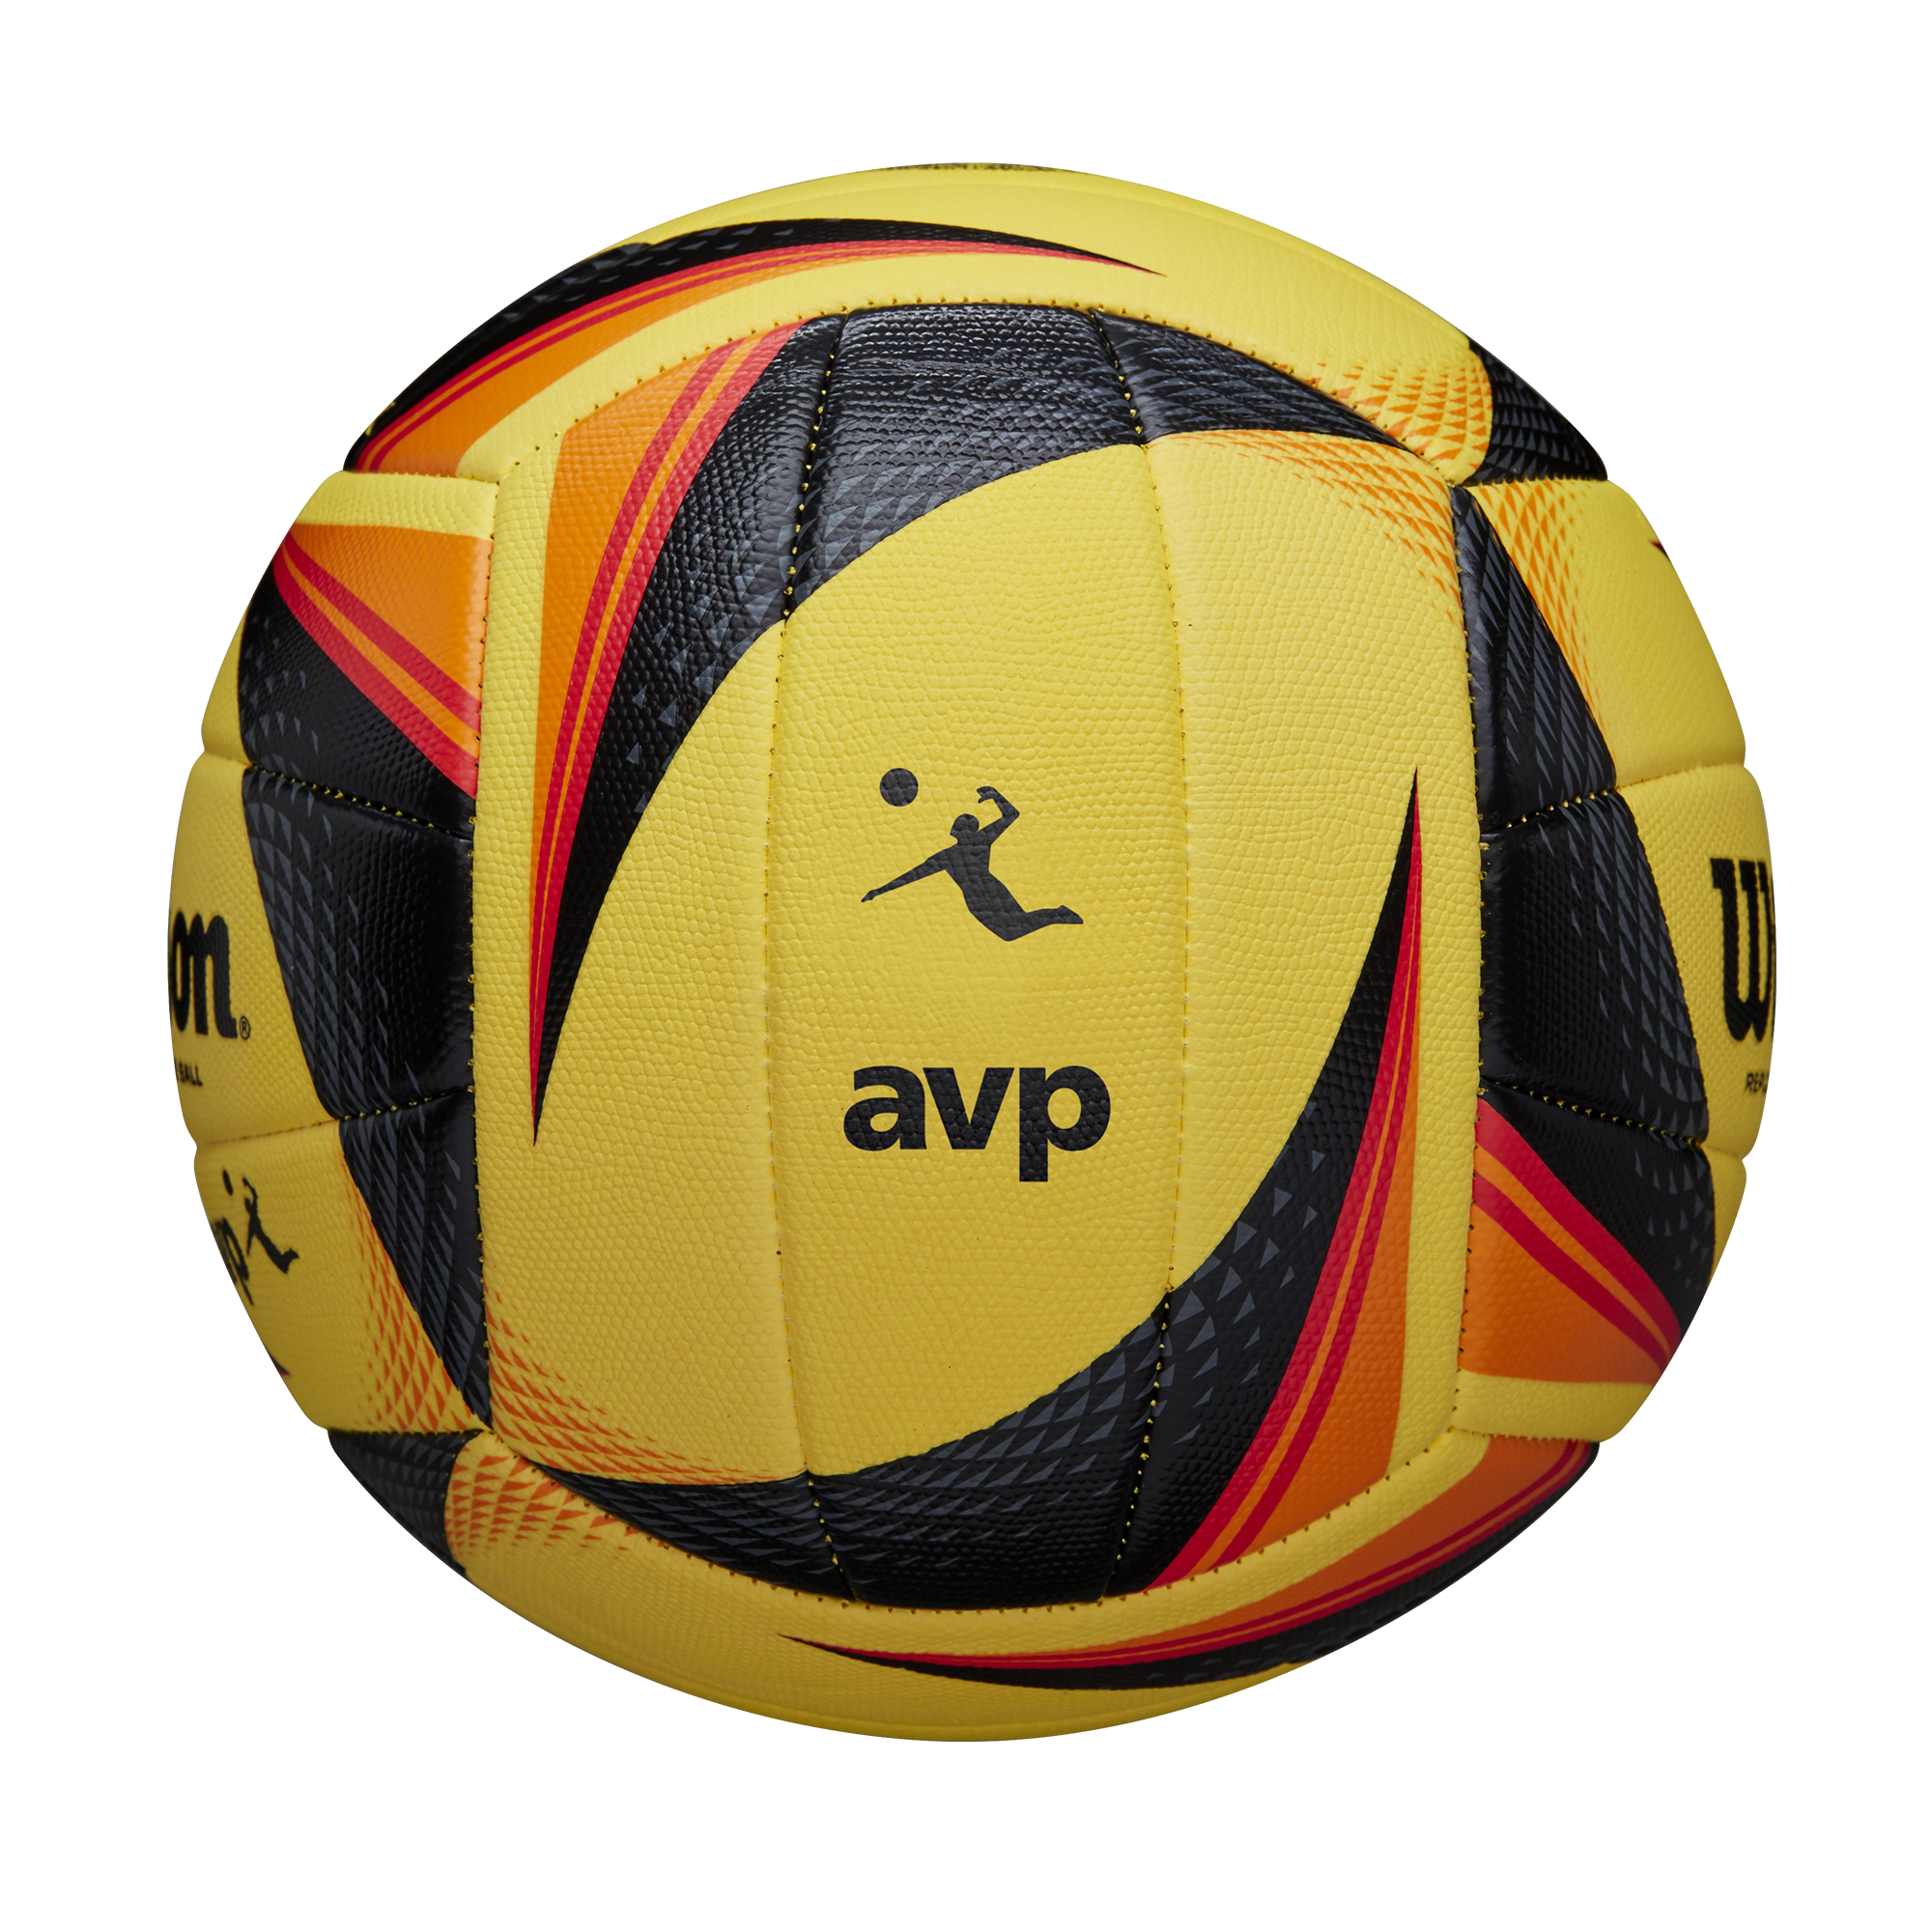 Wilson AVP OPTX Replica Volleyball